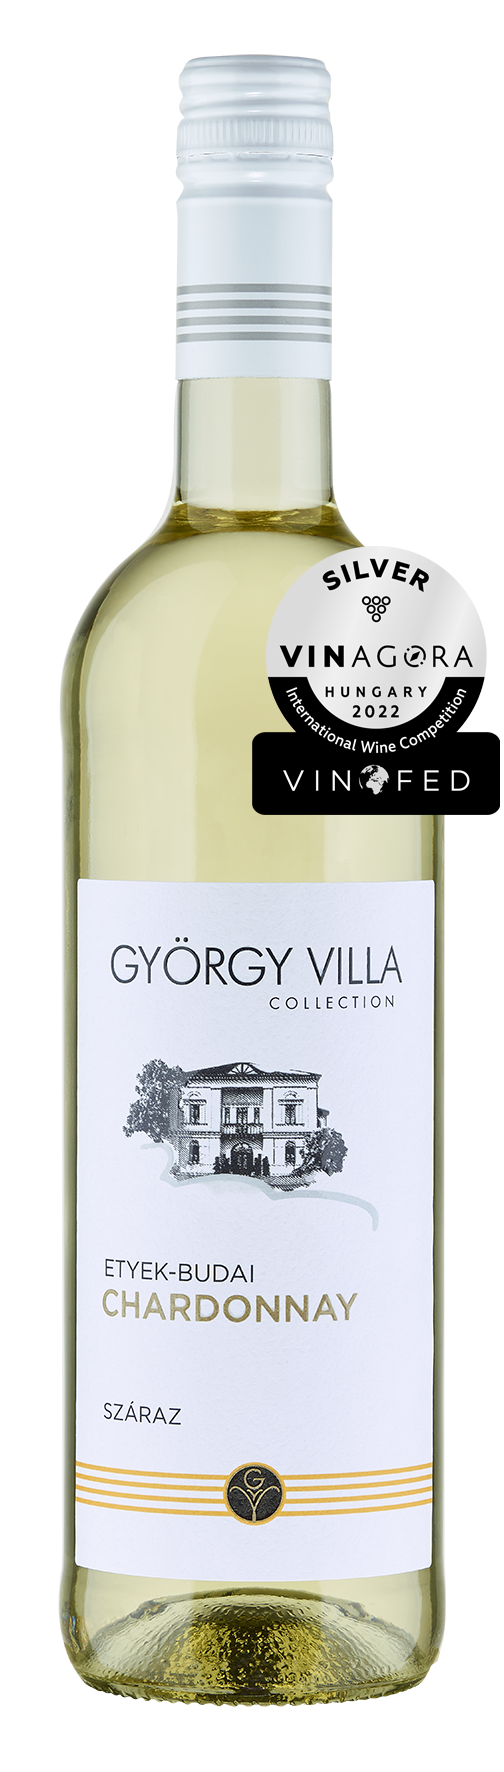 György-Villa Collection Etyek-Budai Chardonnay 